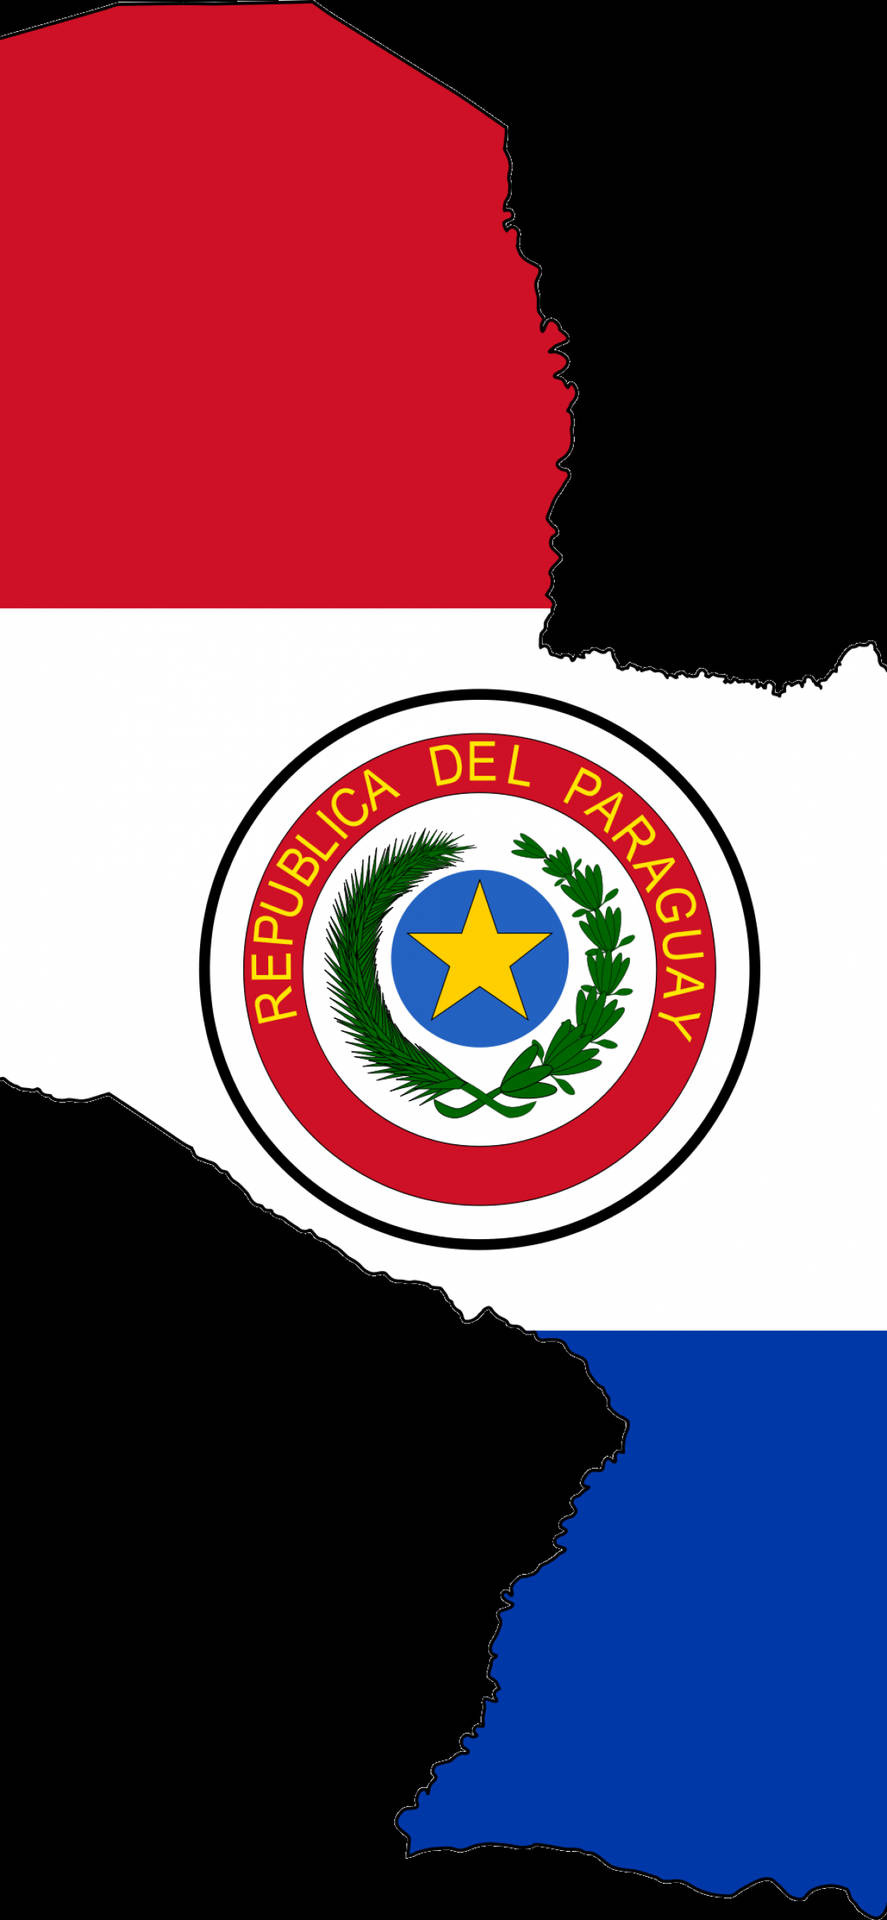 Paraguay Land Seal Wallpaper